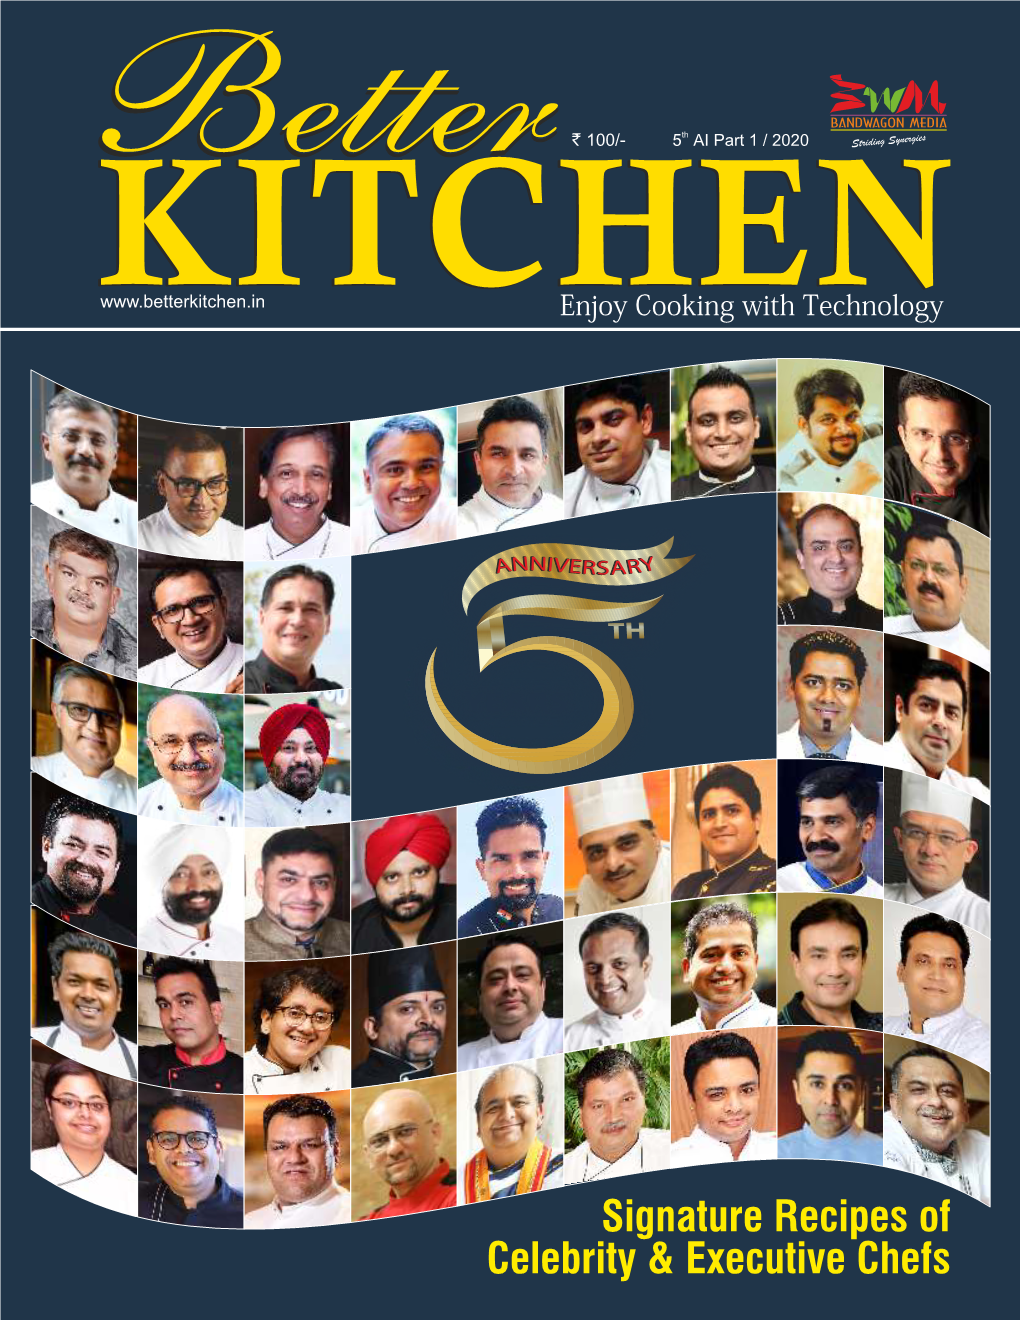 Signature Recipes of Celebrity & Executive Chefs